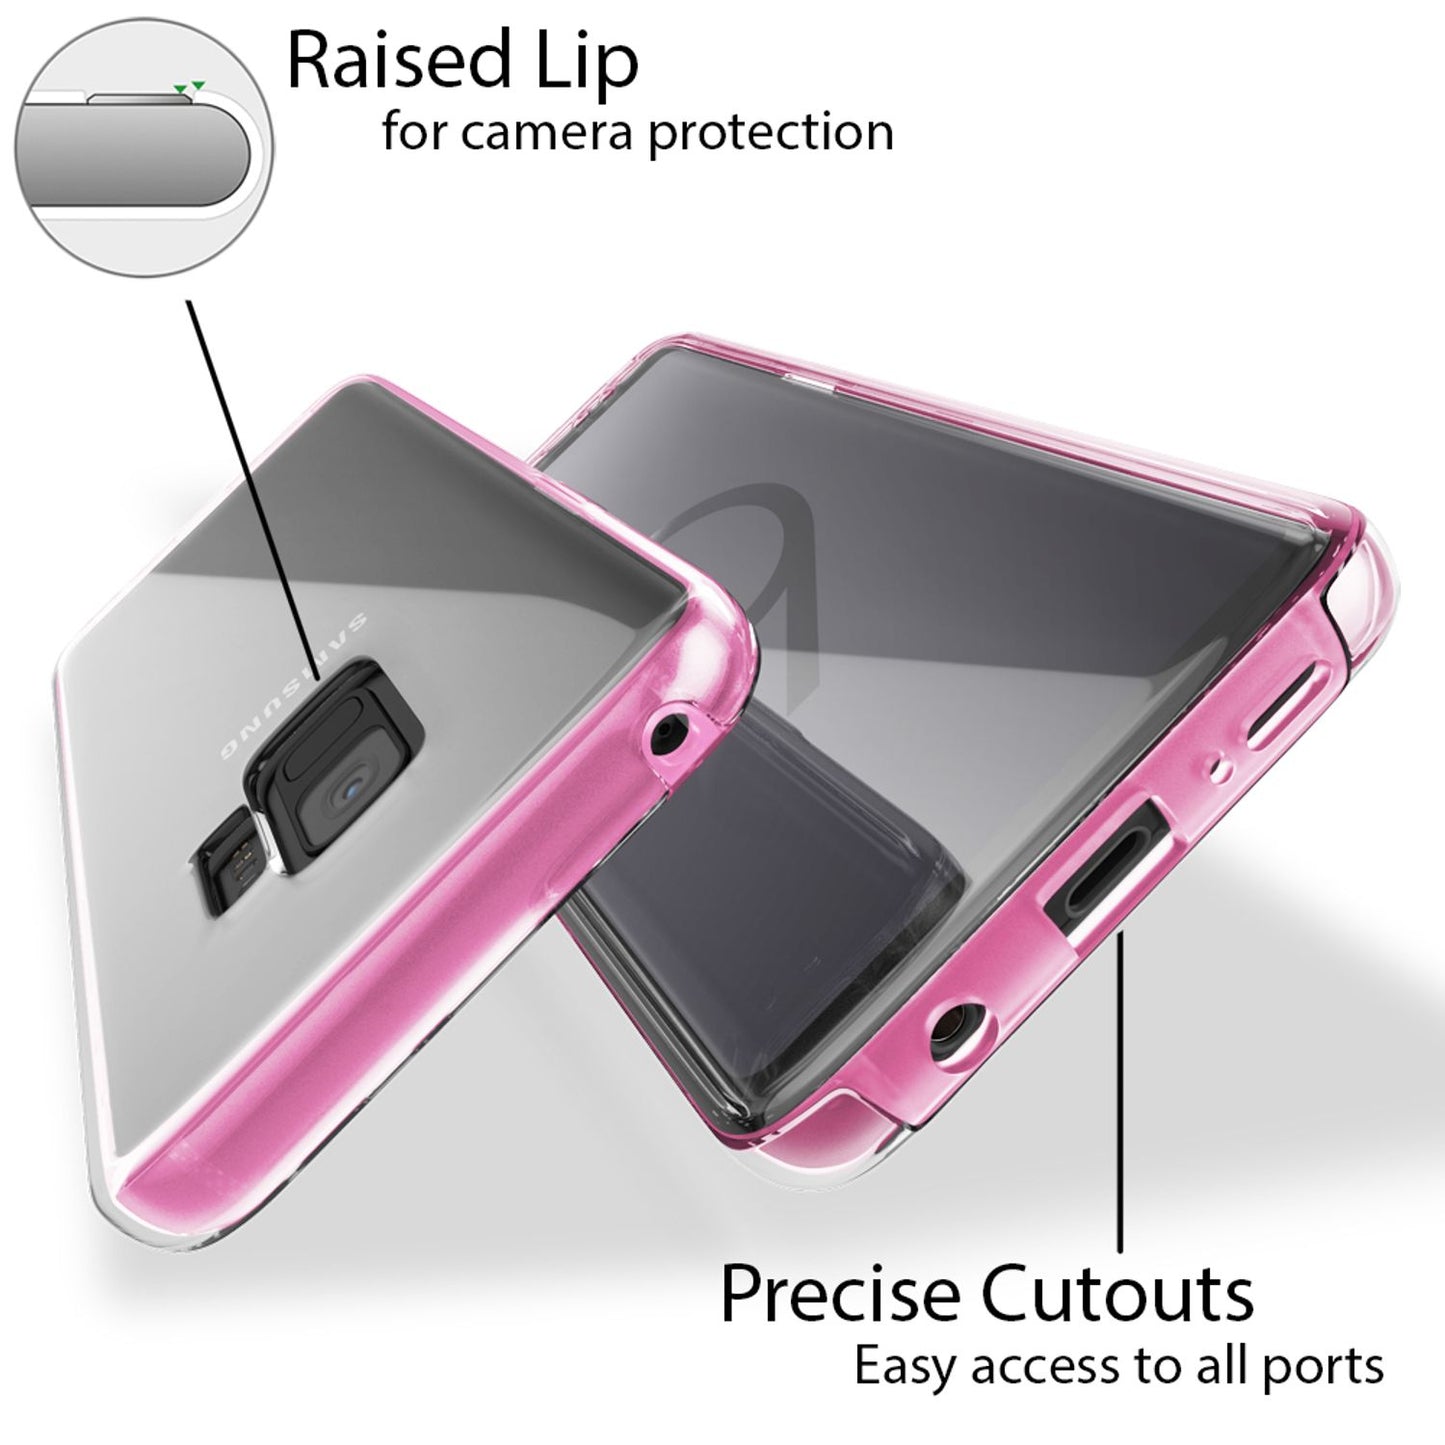 NALIA 360 Grad Handy Hülle für Samsung Galaxy S9, Full Cover Case Bumper Etui